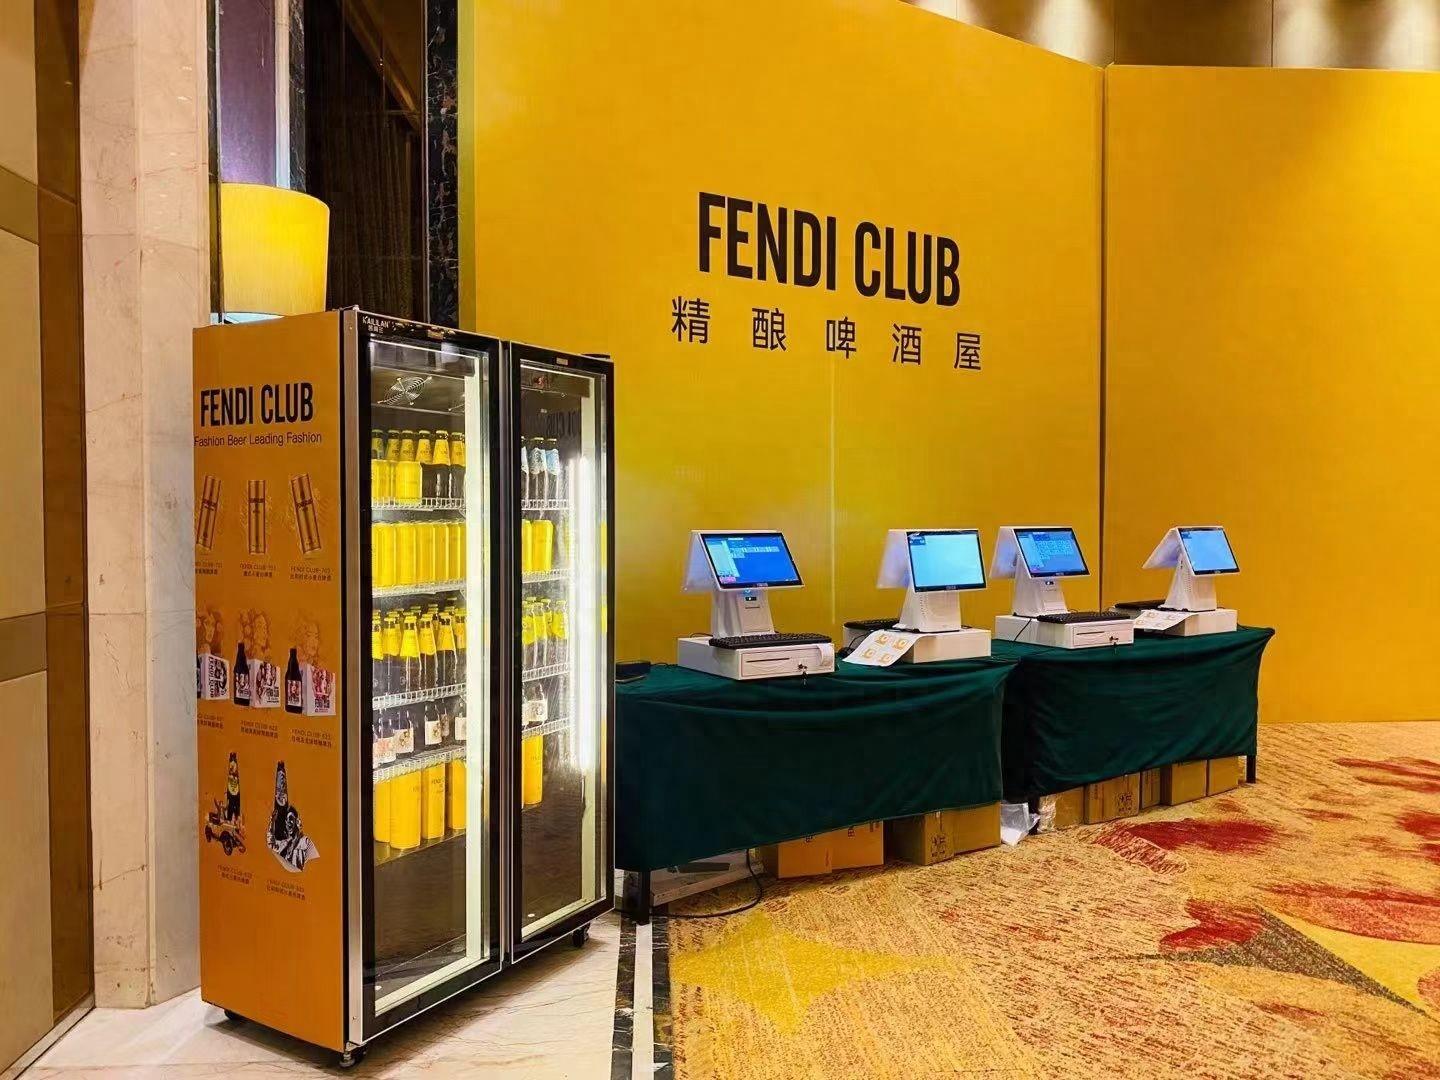 FENDI CLUB分享啤酒与健康：饮酒